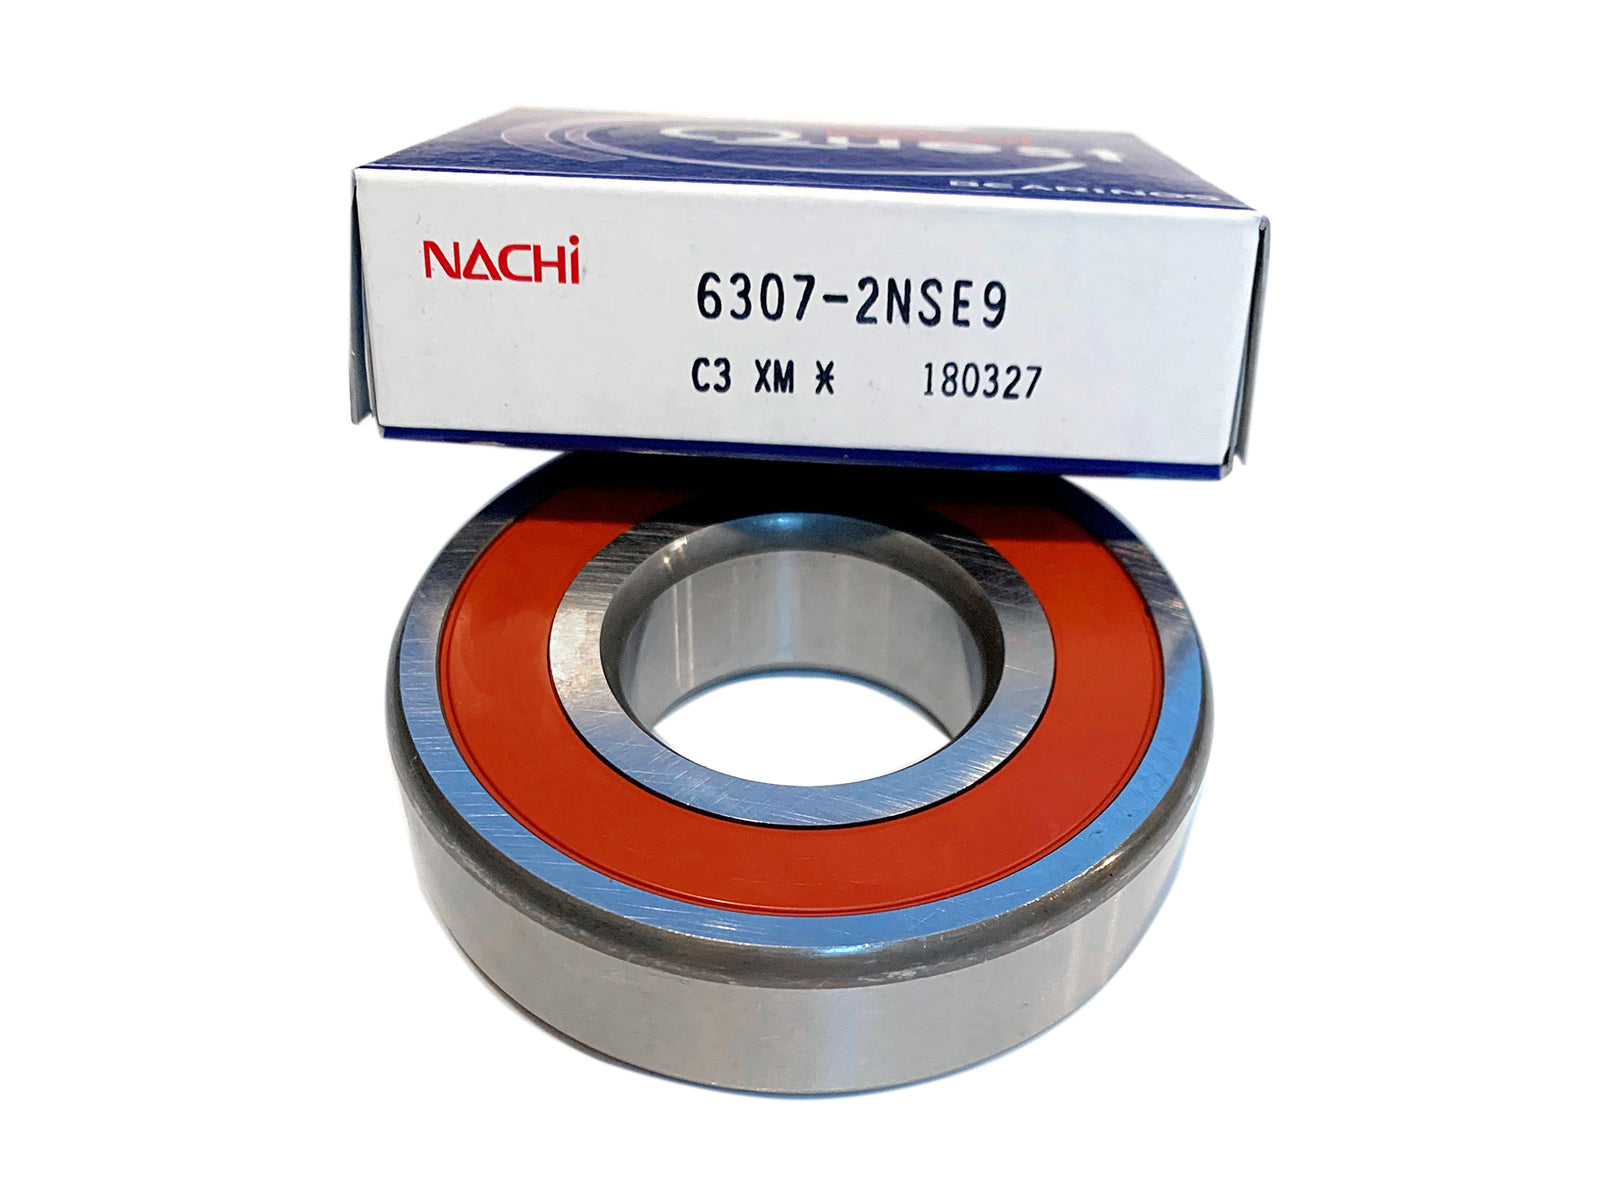 6307-2NSE9 C3 Nachi Ball Bearing - ppdistributors